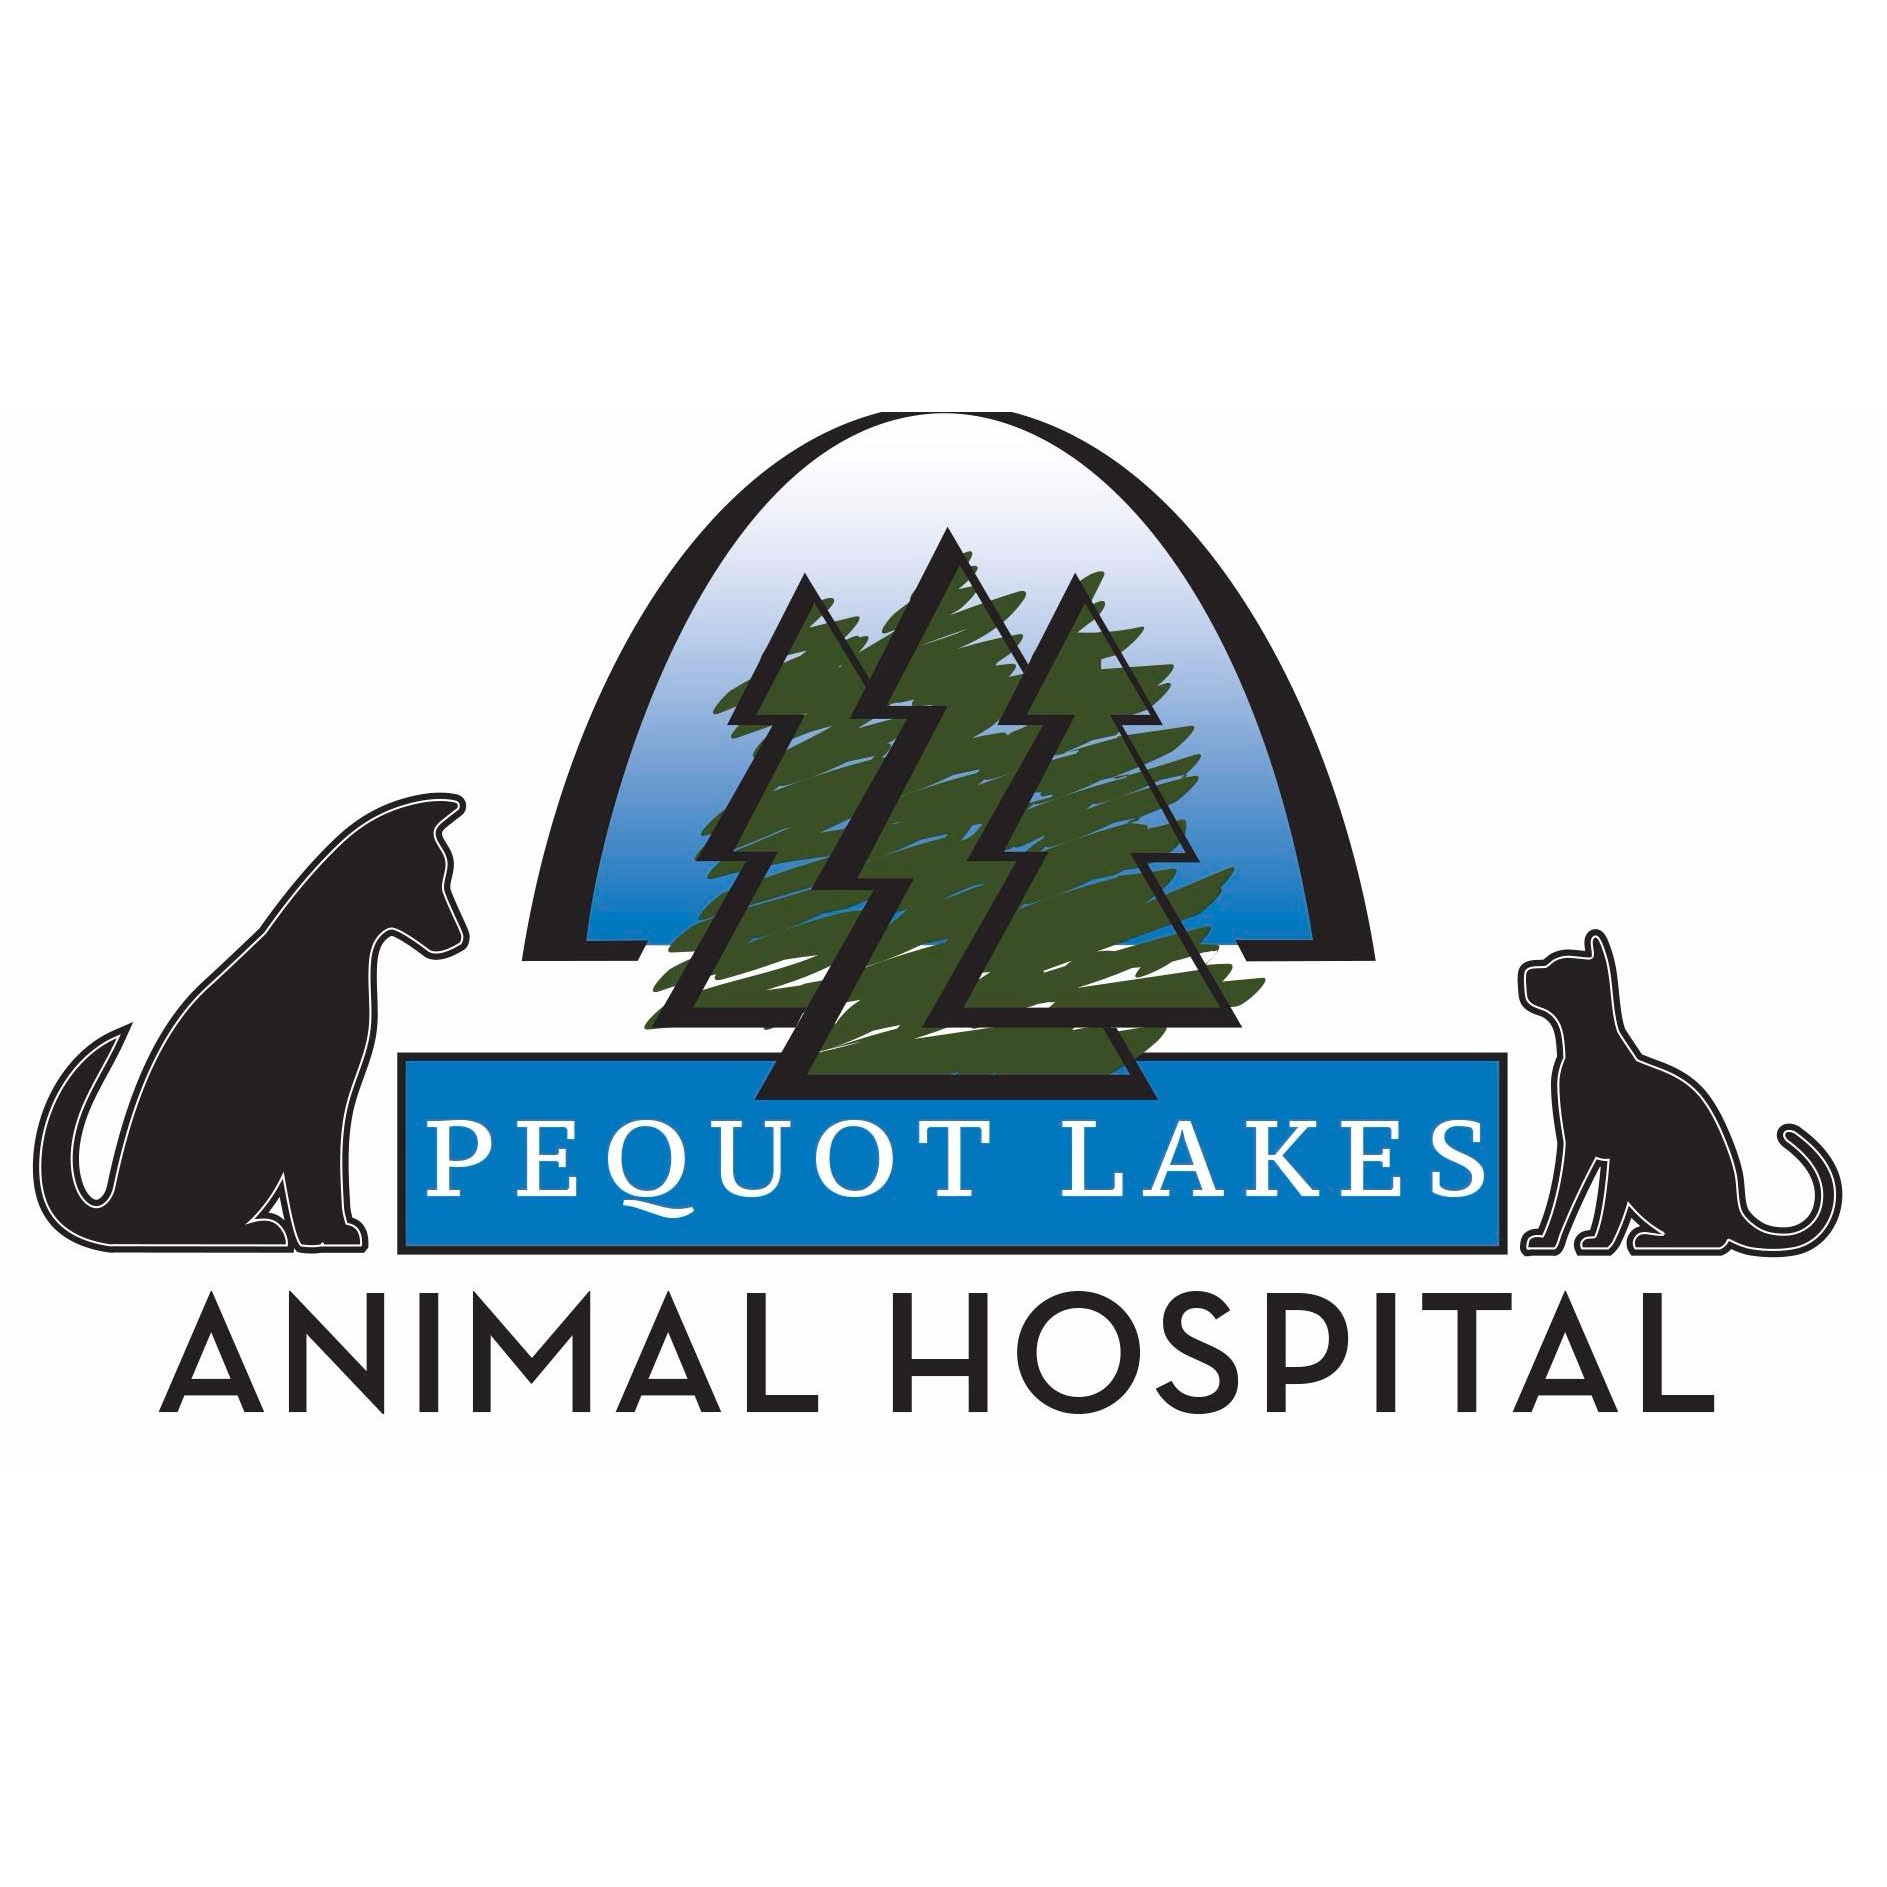 Pequot Lakes Animal Hospital - Pequot Lakes, MN 56472 - (218)568-5095 | ShowMeLocal.com